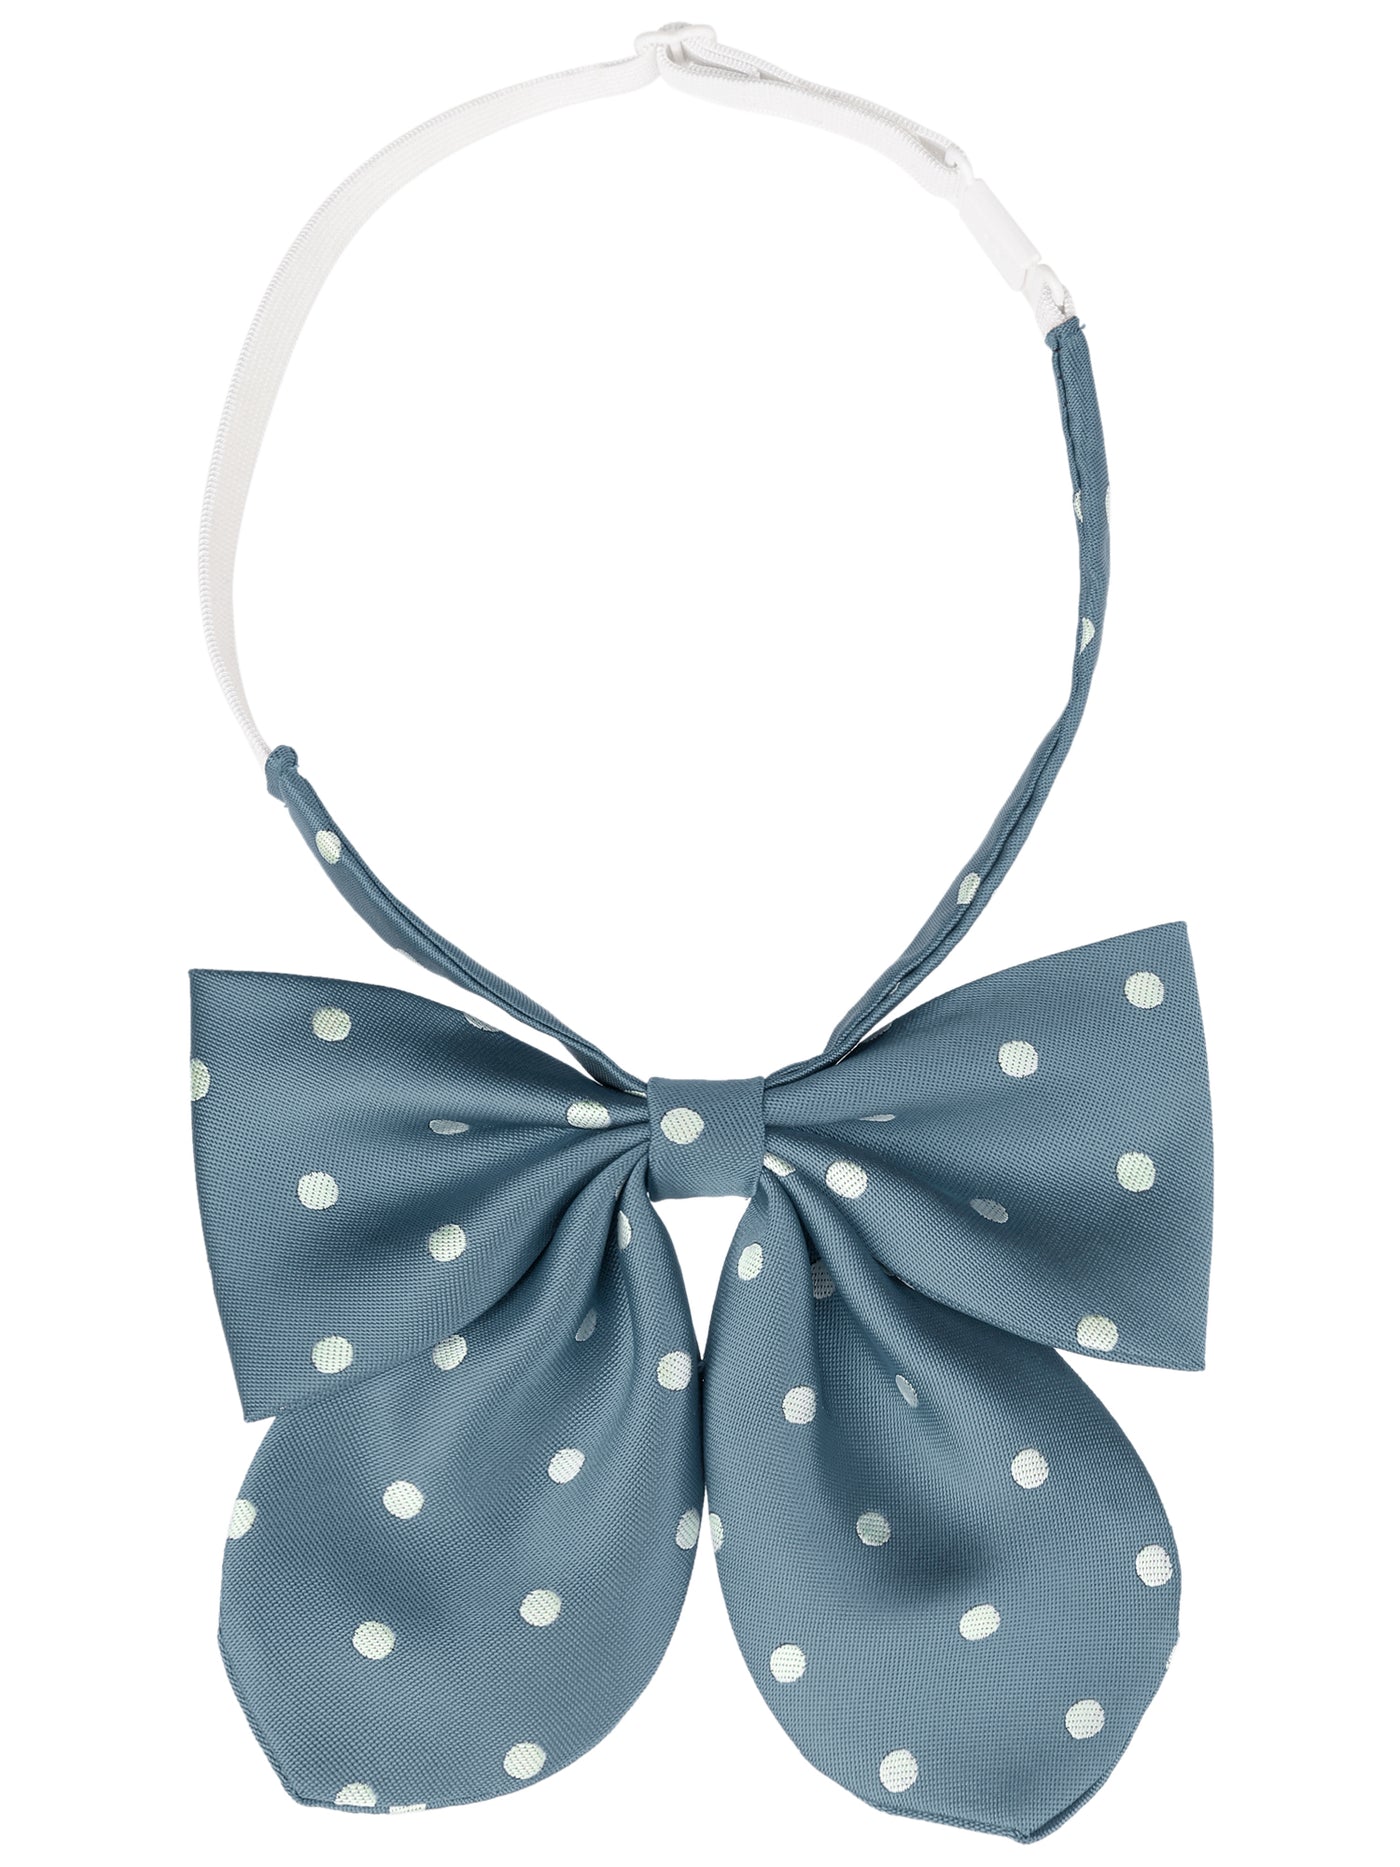 Bublédon Women's Cute Ribbon Bow Ties Polka Dots Neckwear Adjustable Straps for School Casual